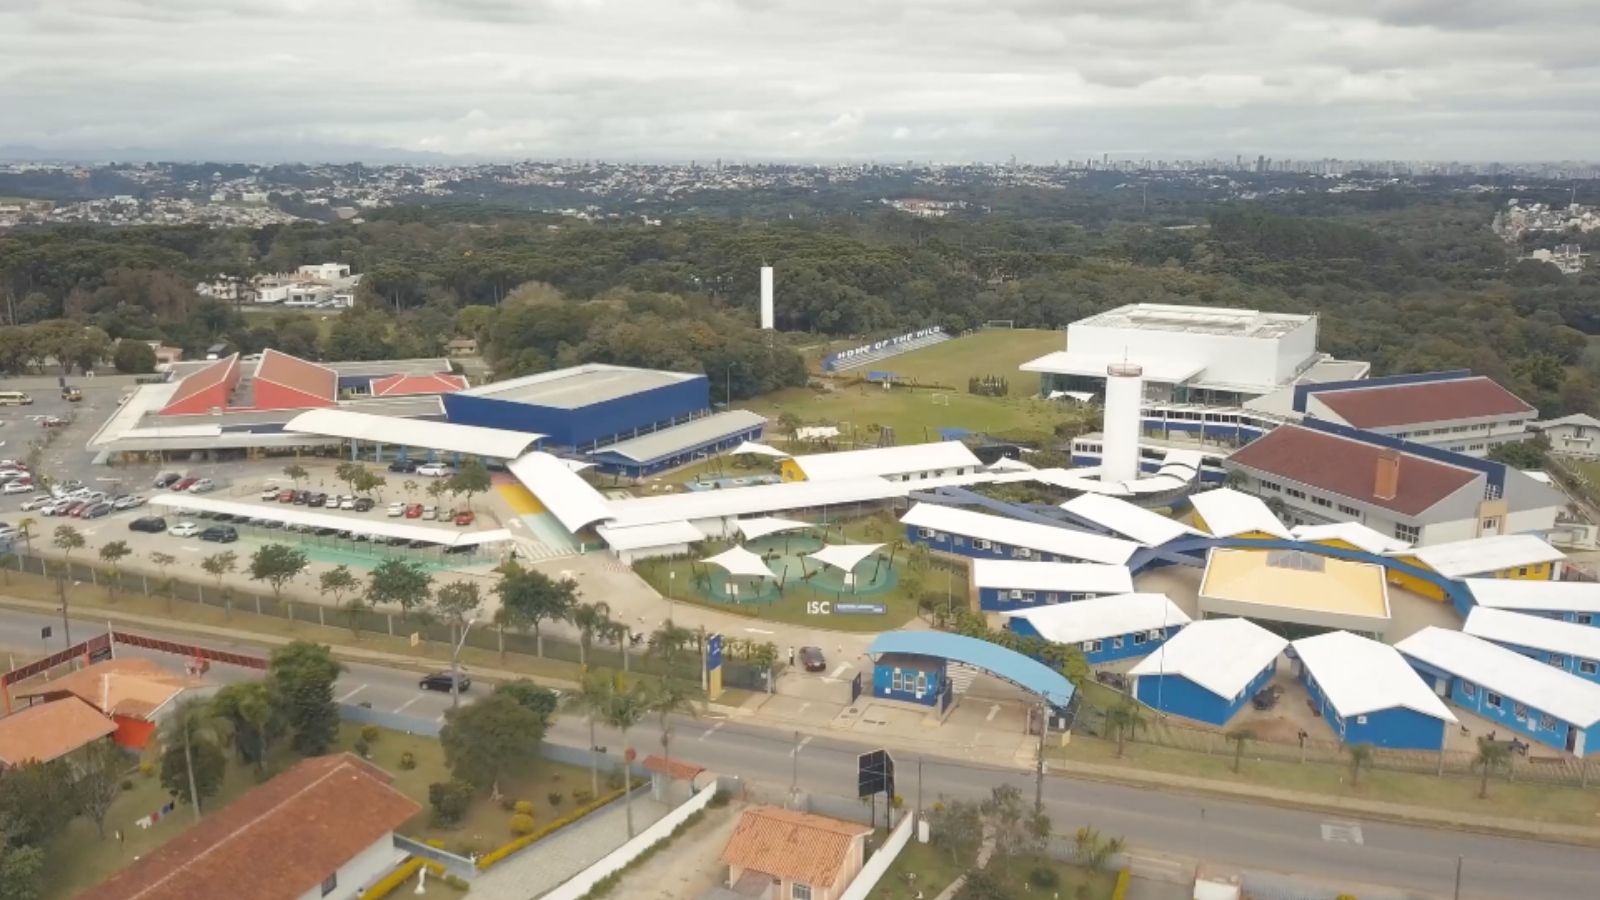 International School of Curitiba